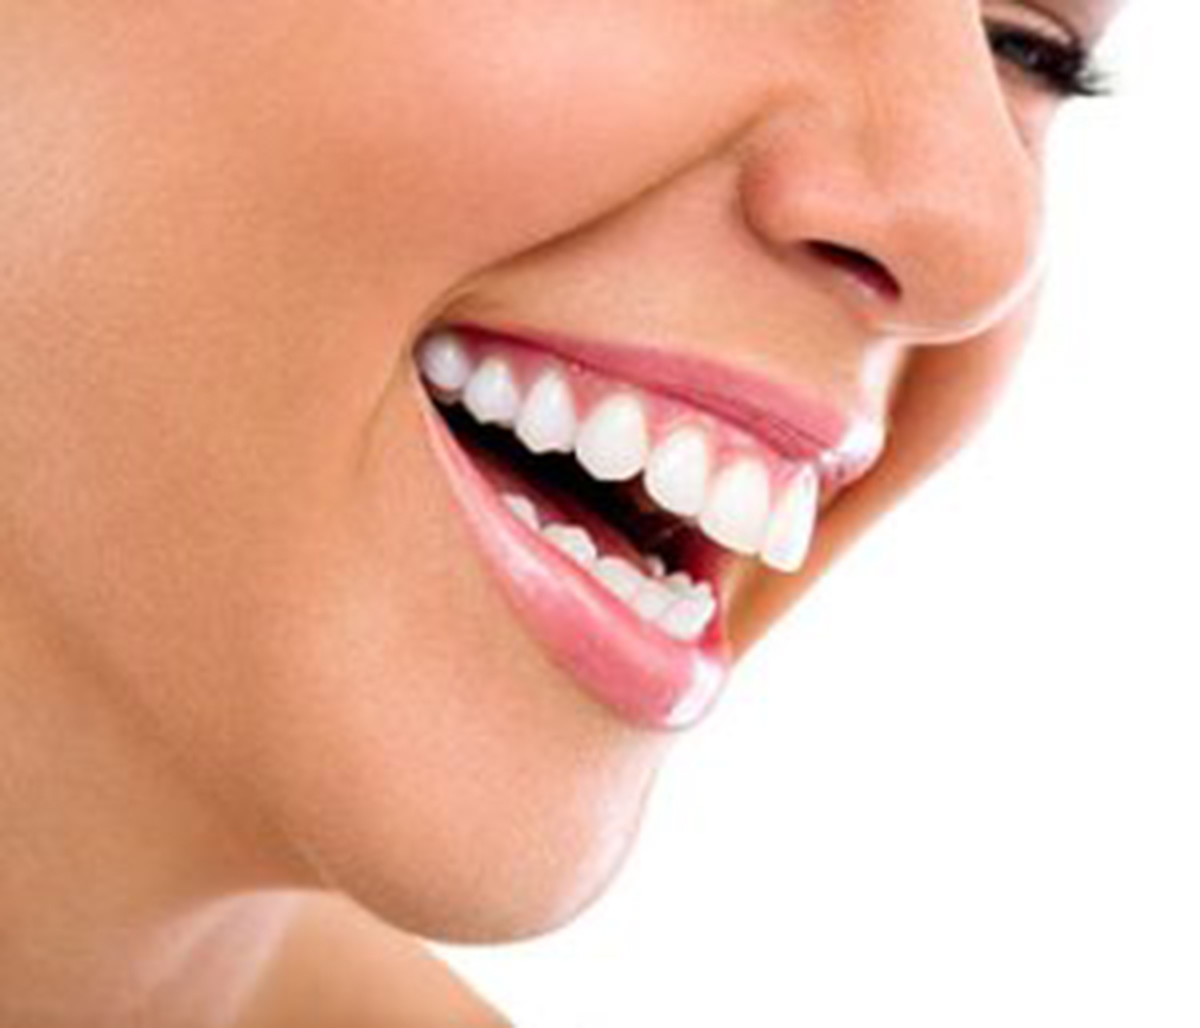 Cornelius patients ask, “What are the advantages of Zirconium dental implants?”